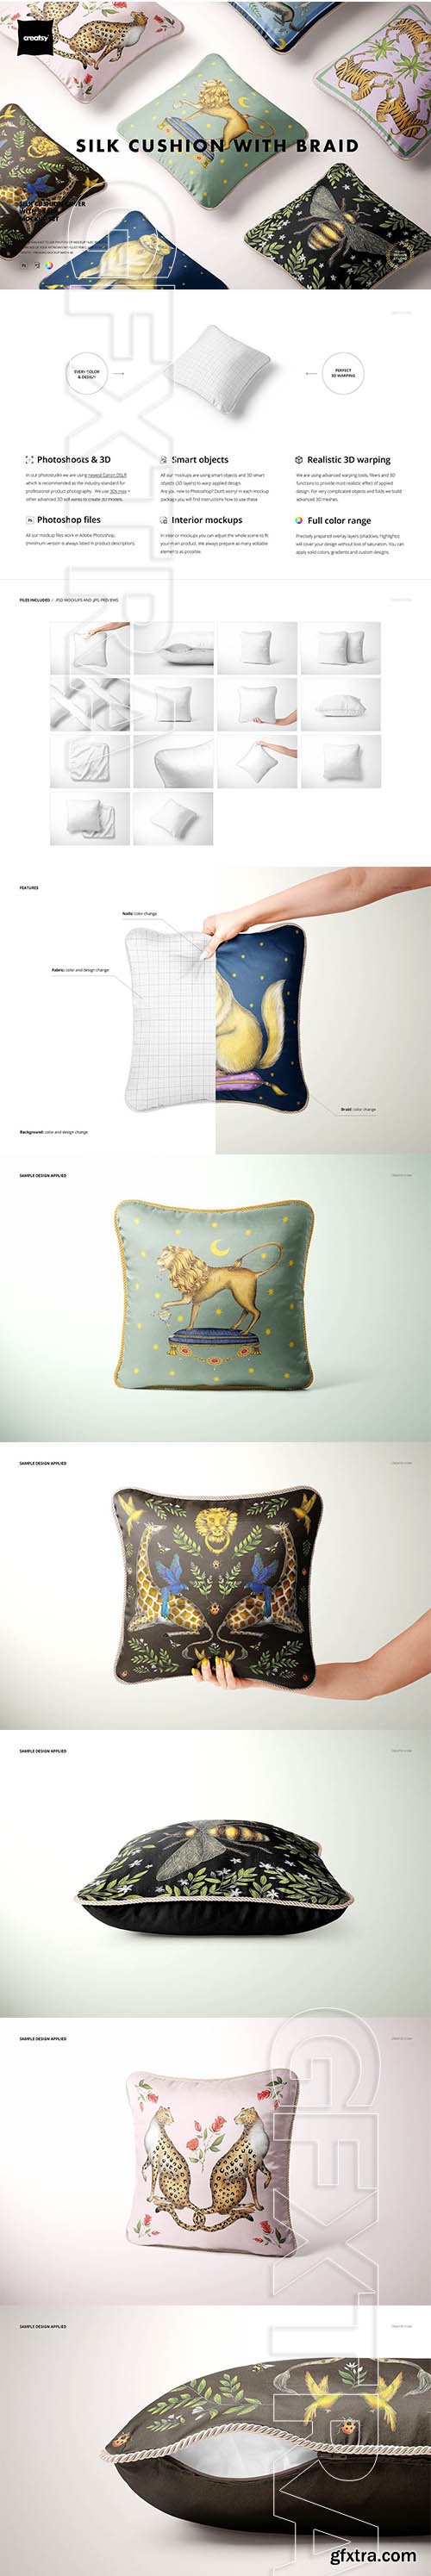 CreativeMarket - Silk Cushion with Braid Mockup Set 5886307